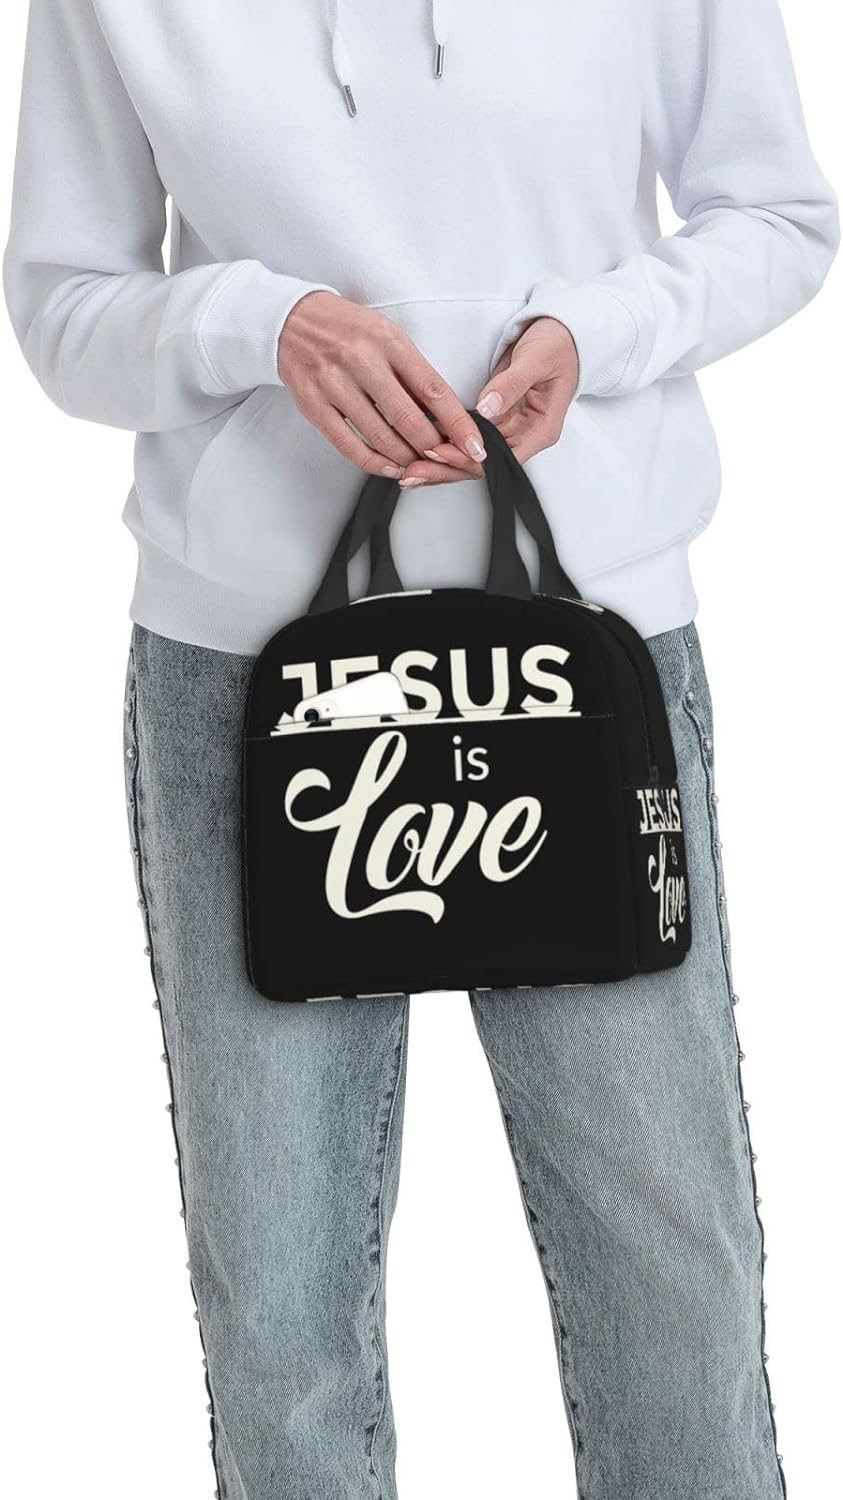 Jesus Is Love Christian Lunch Bag claimedbygoddesigns